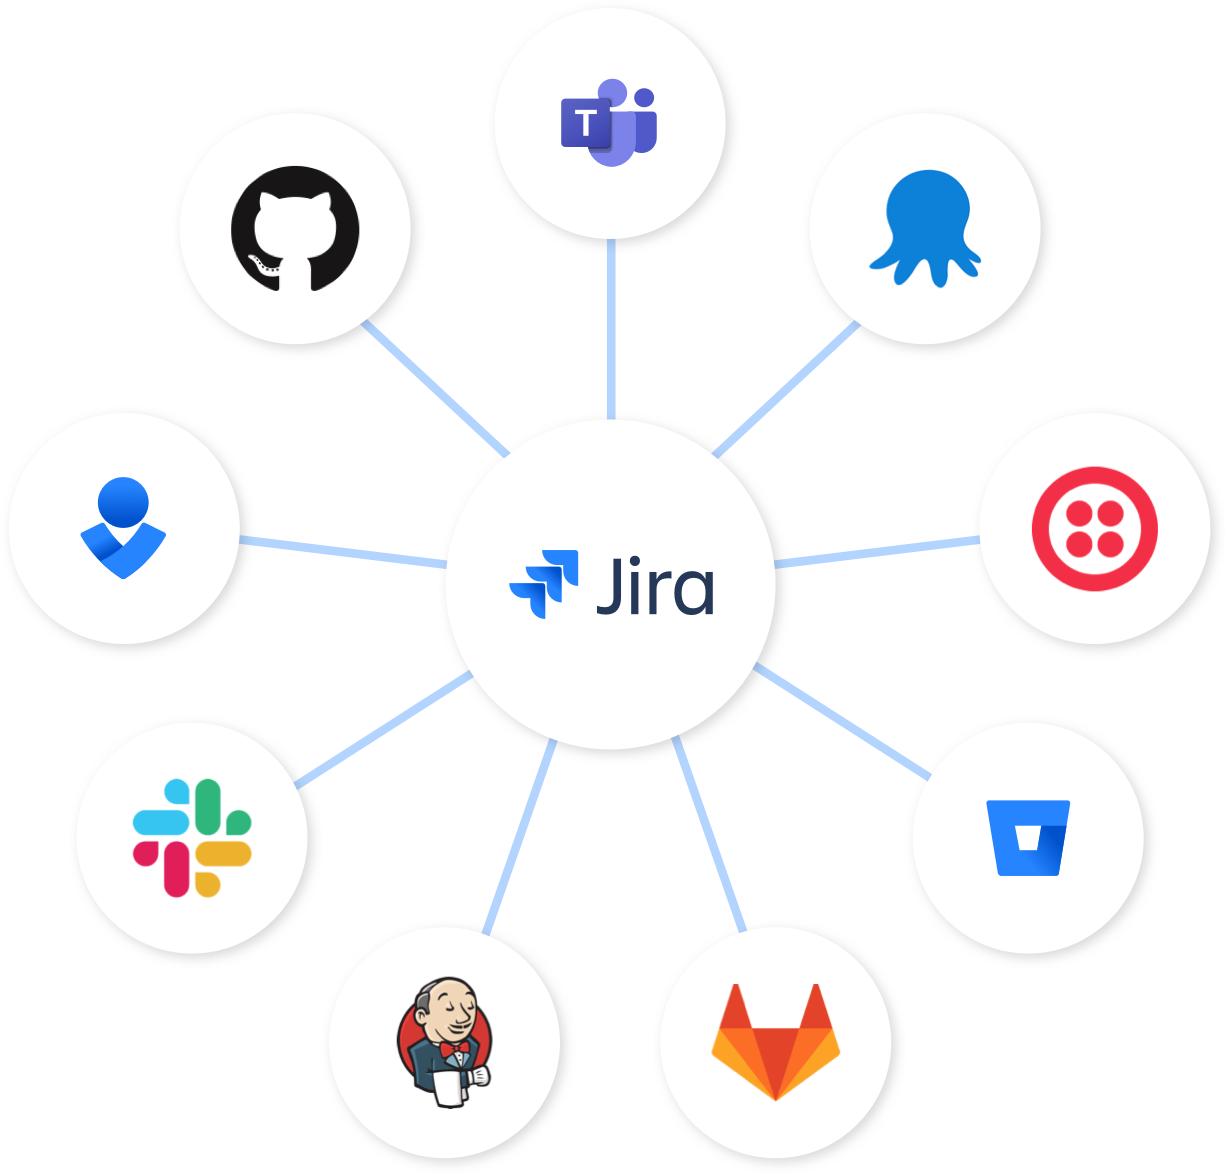 Jira 노드 - Bitbucket, Slack 및 Opsgenie와 연결된 채 가운데에 있는 Jira